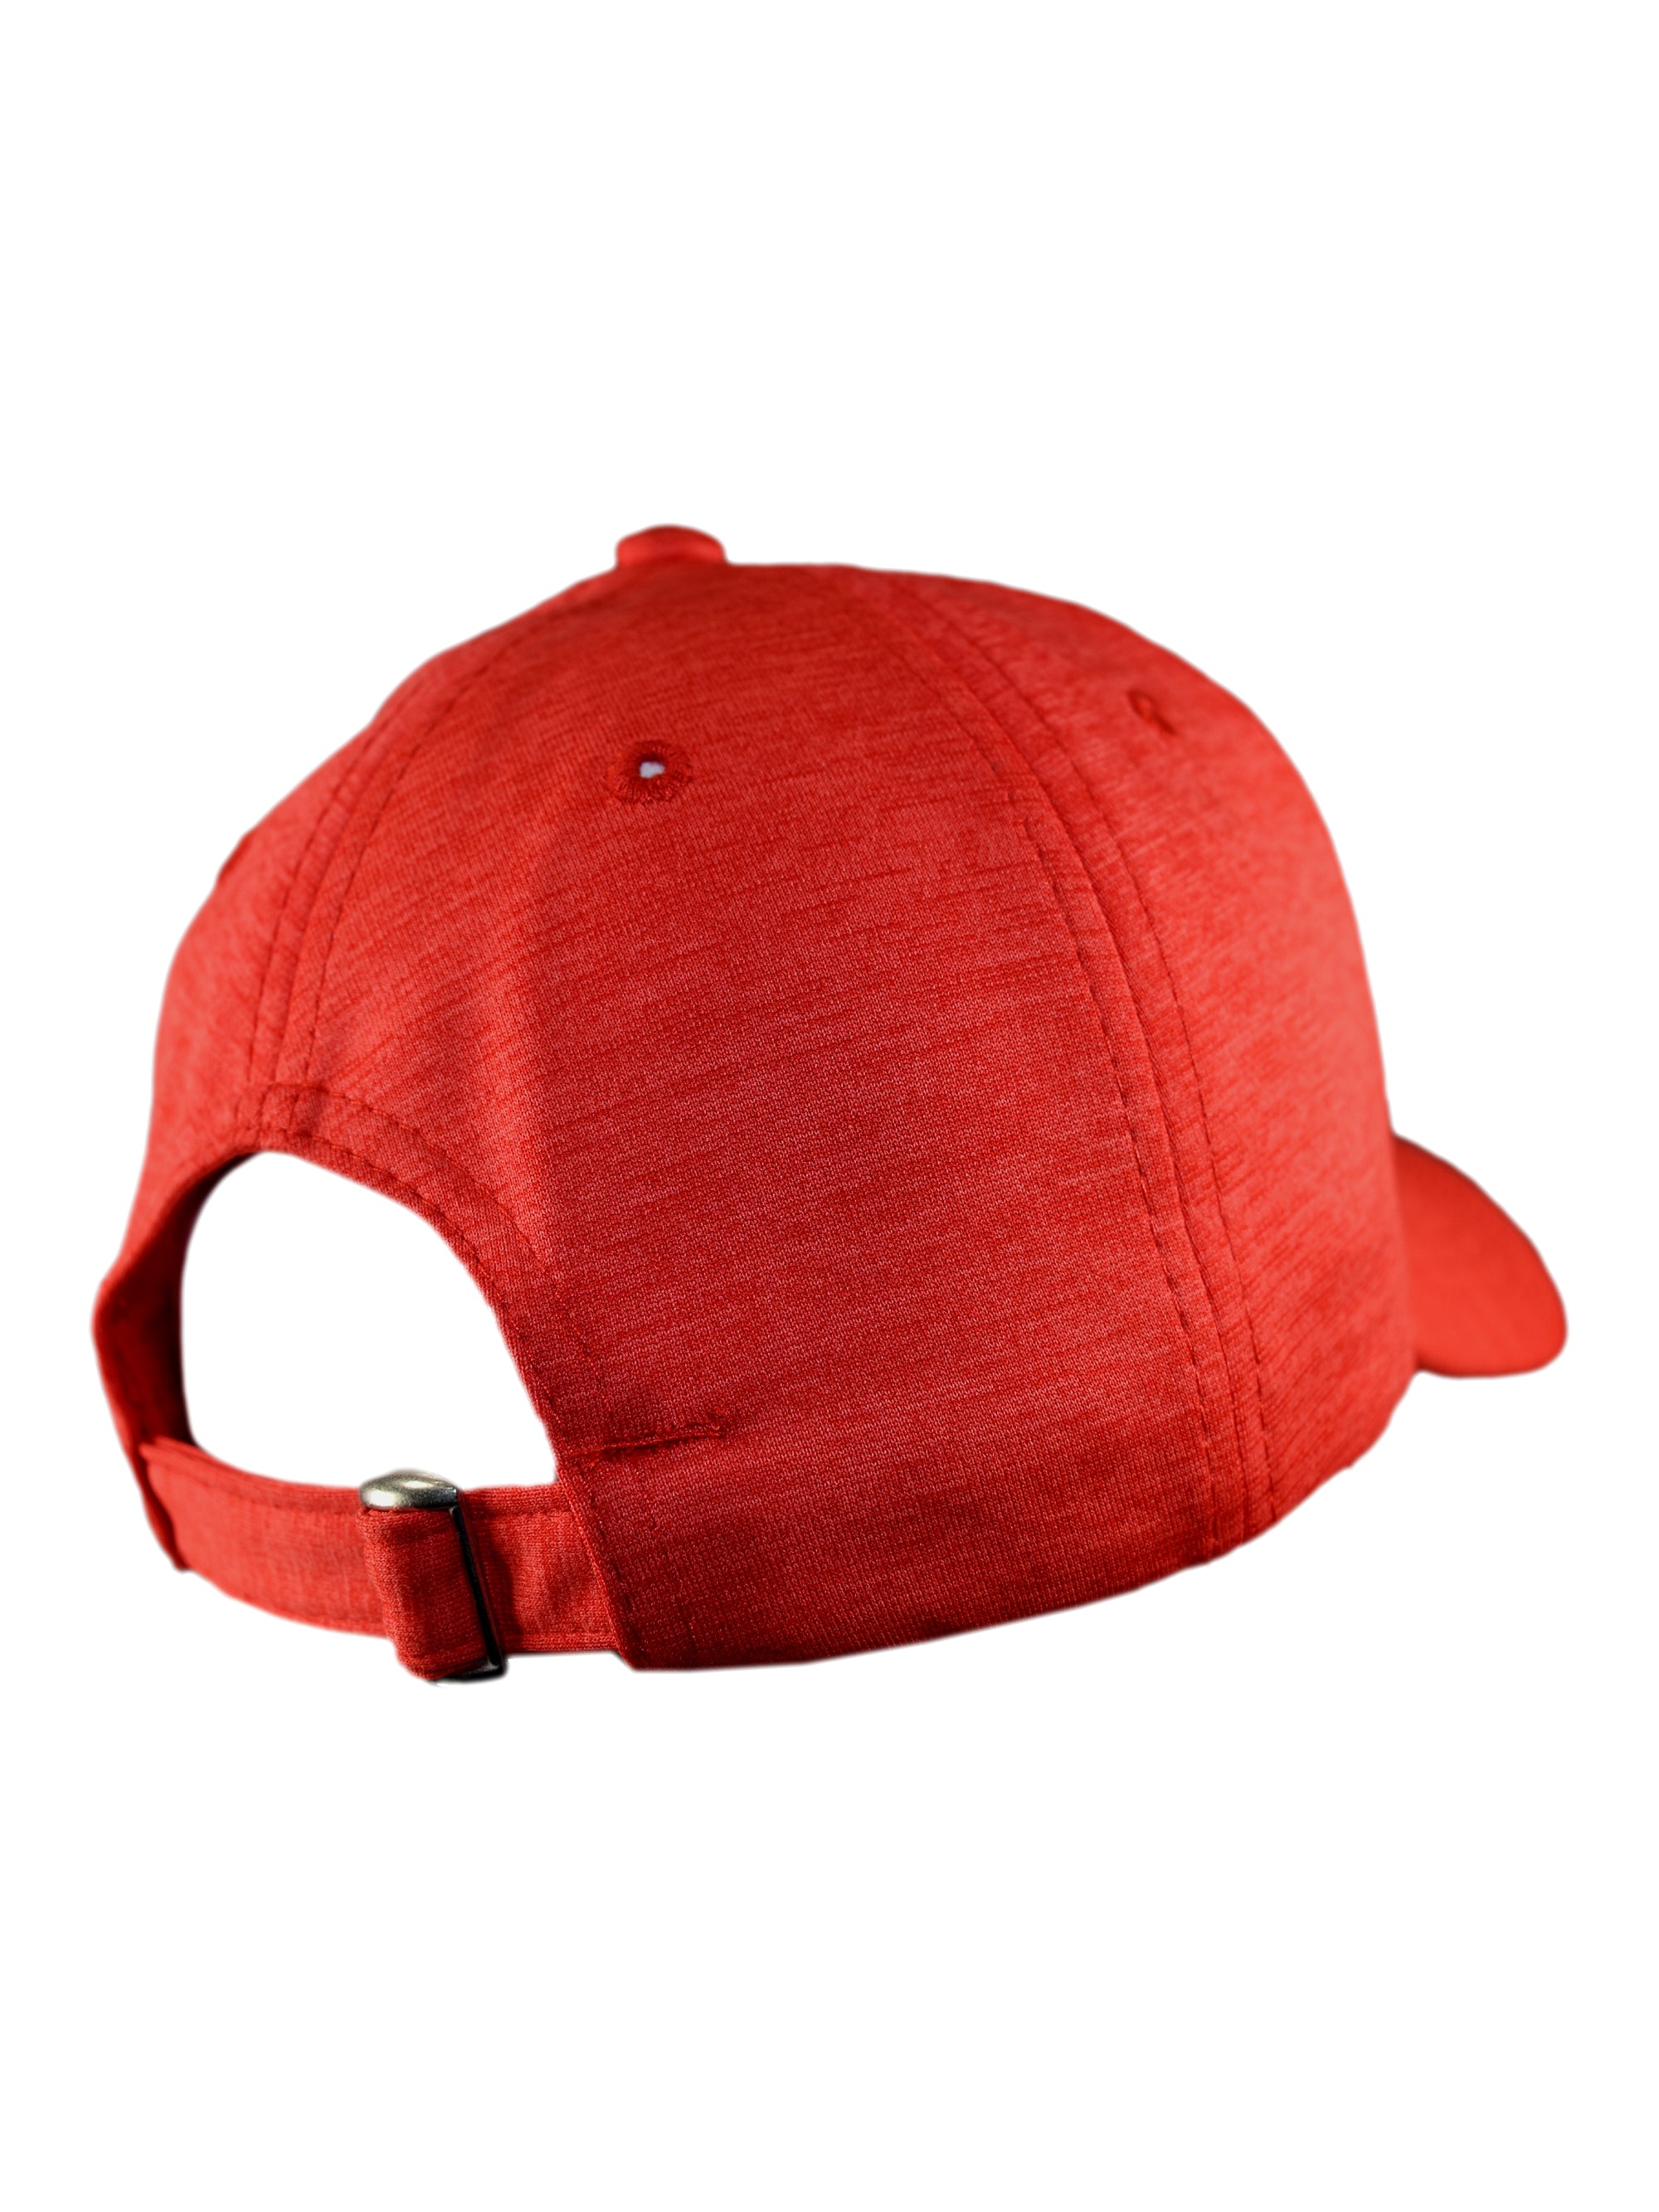 RED HAT W/BLUE FONT